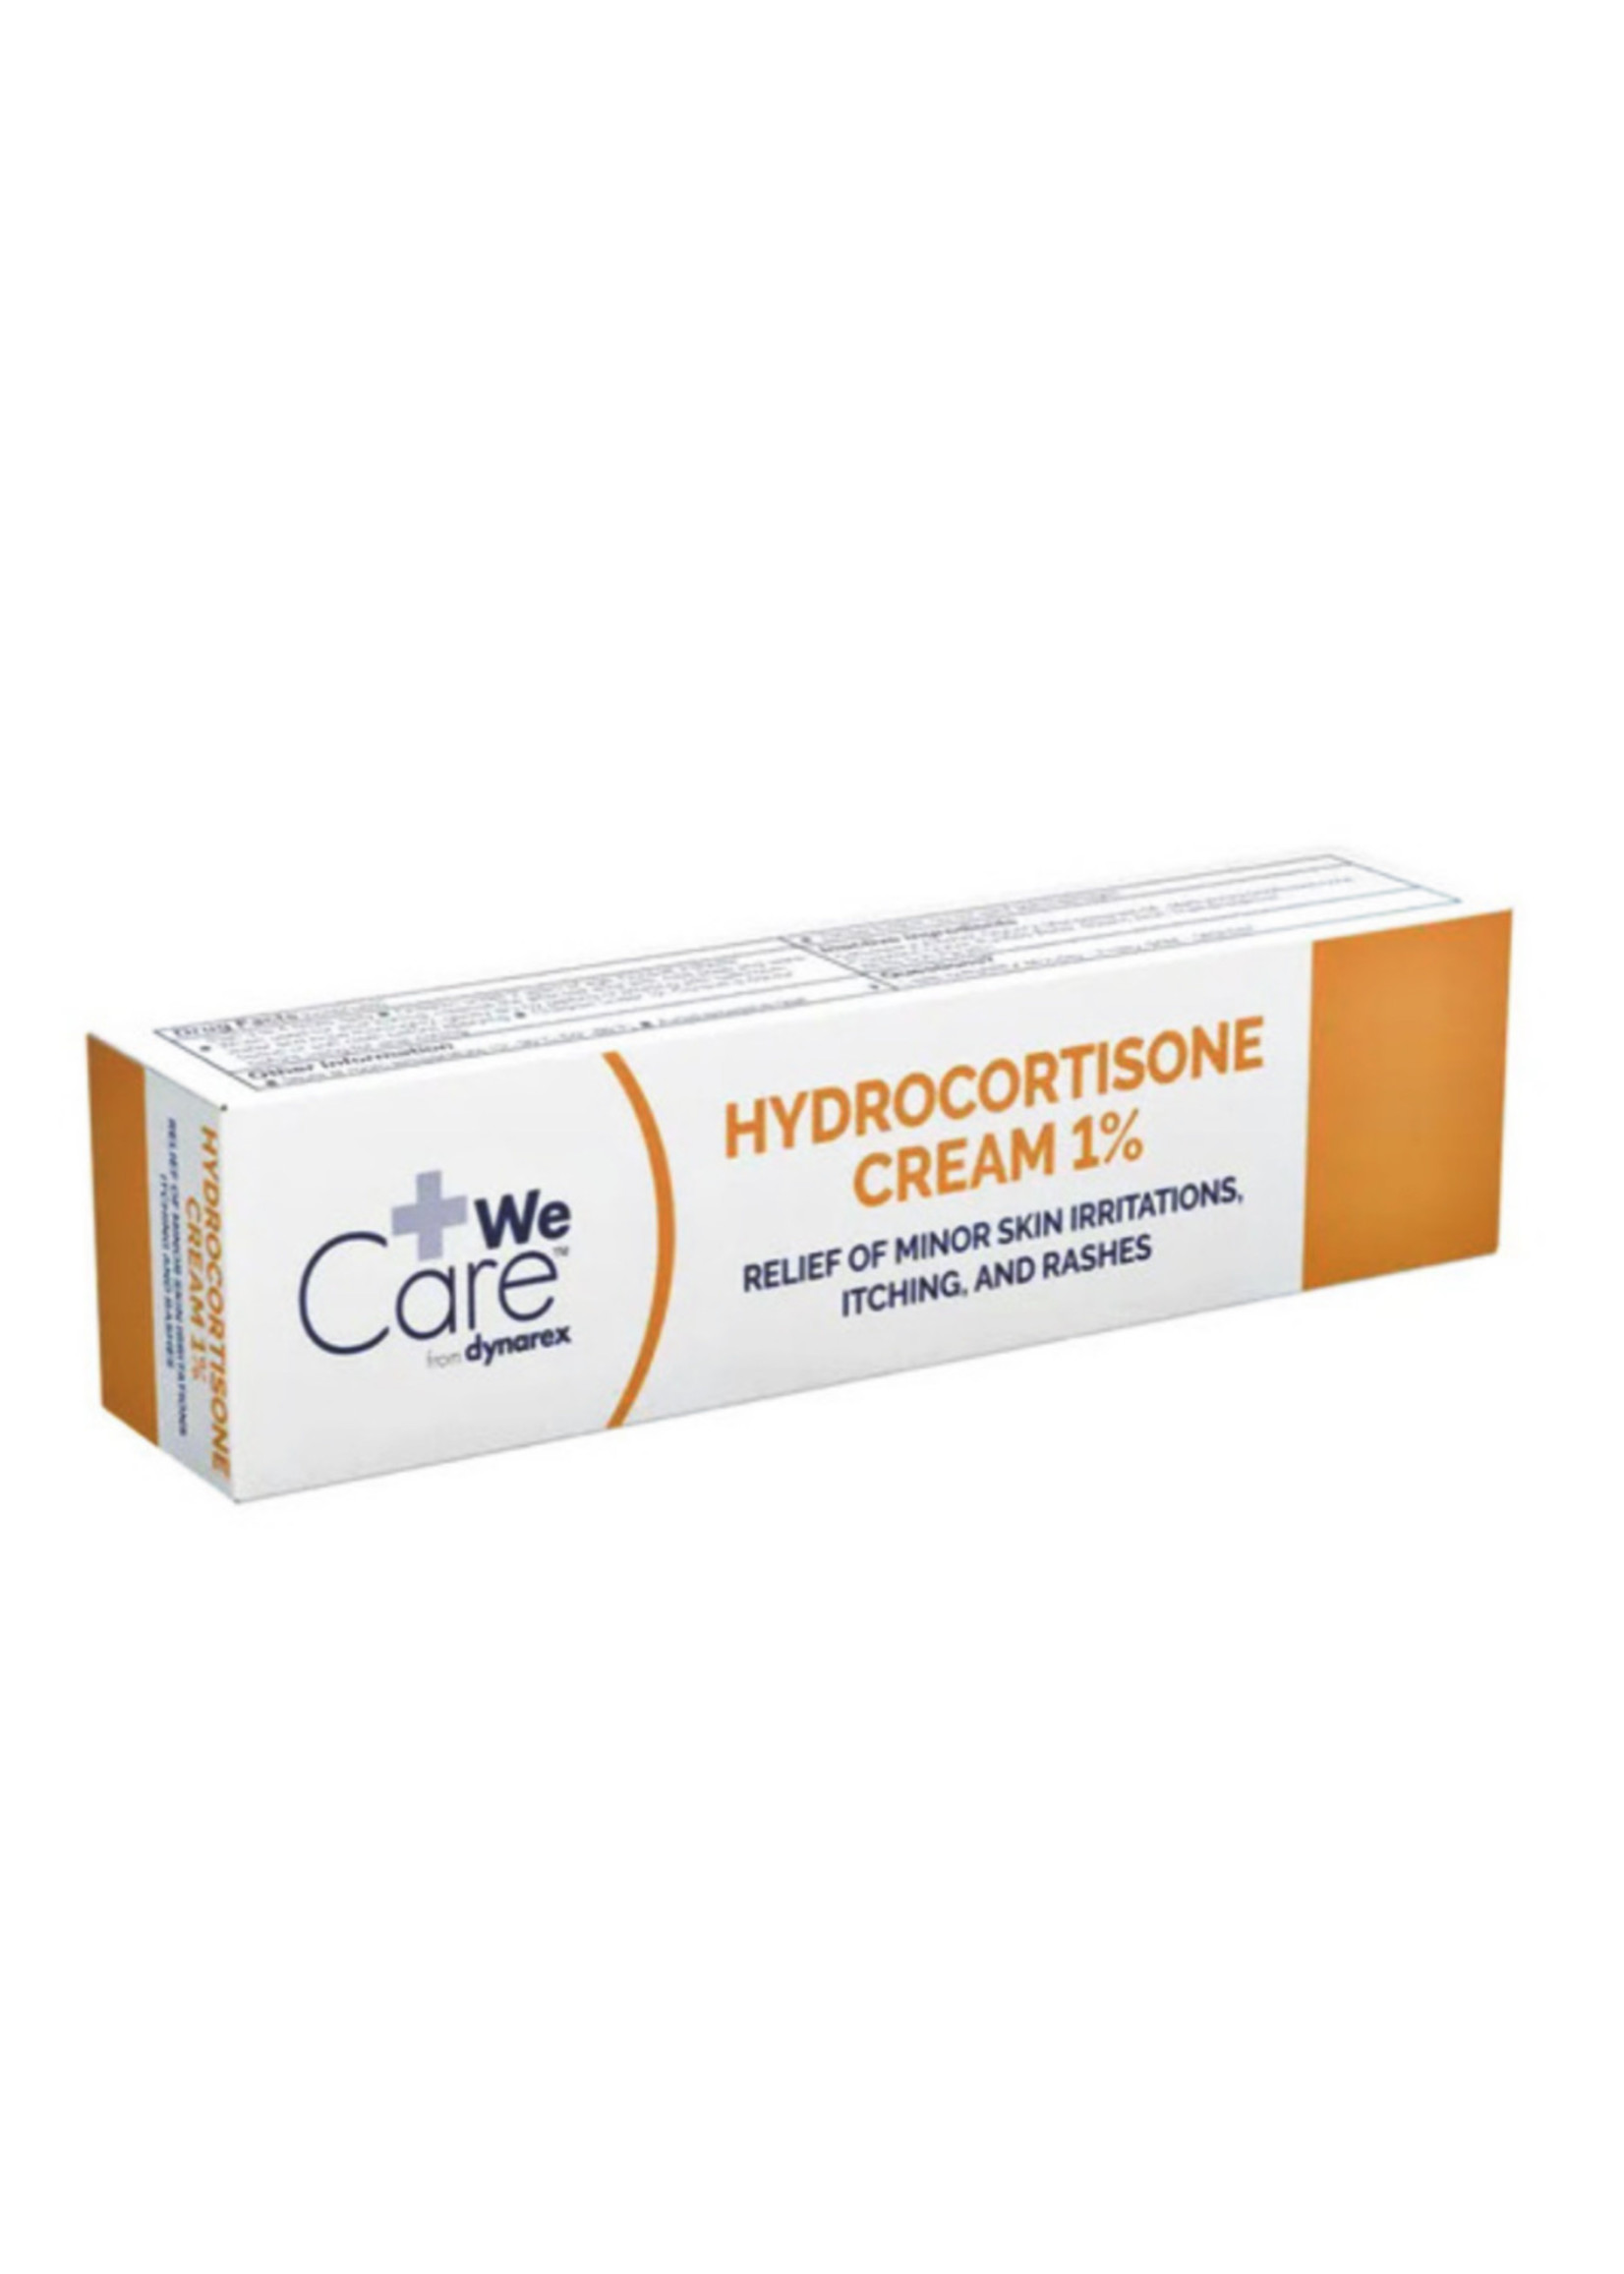 Hydrocortisone Cream - 1oz tube (28.4g) - 72/cs